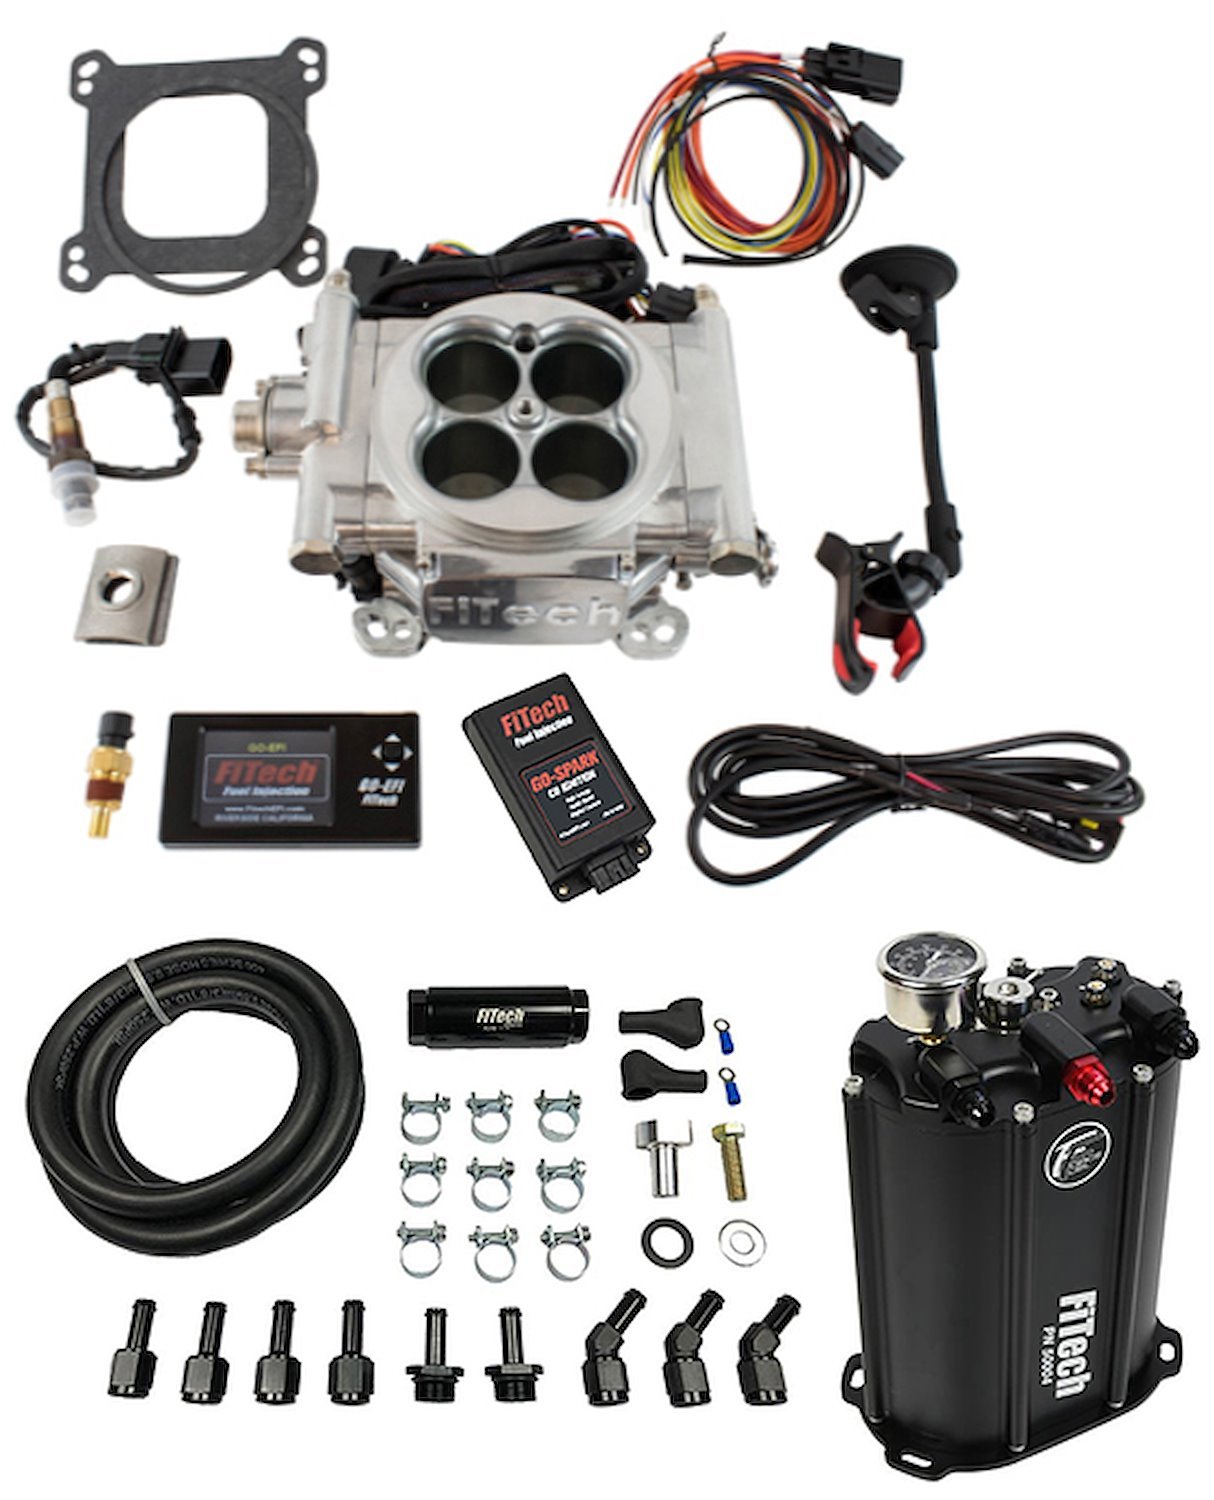 Go EFI-4 600 HP Throttle Body Fuel Injection